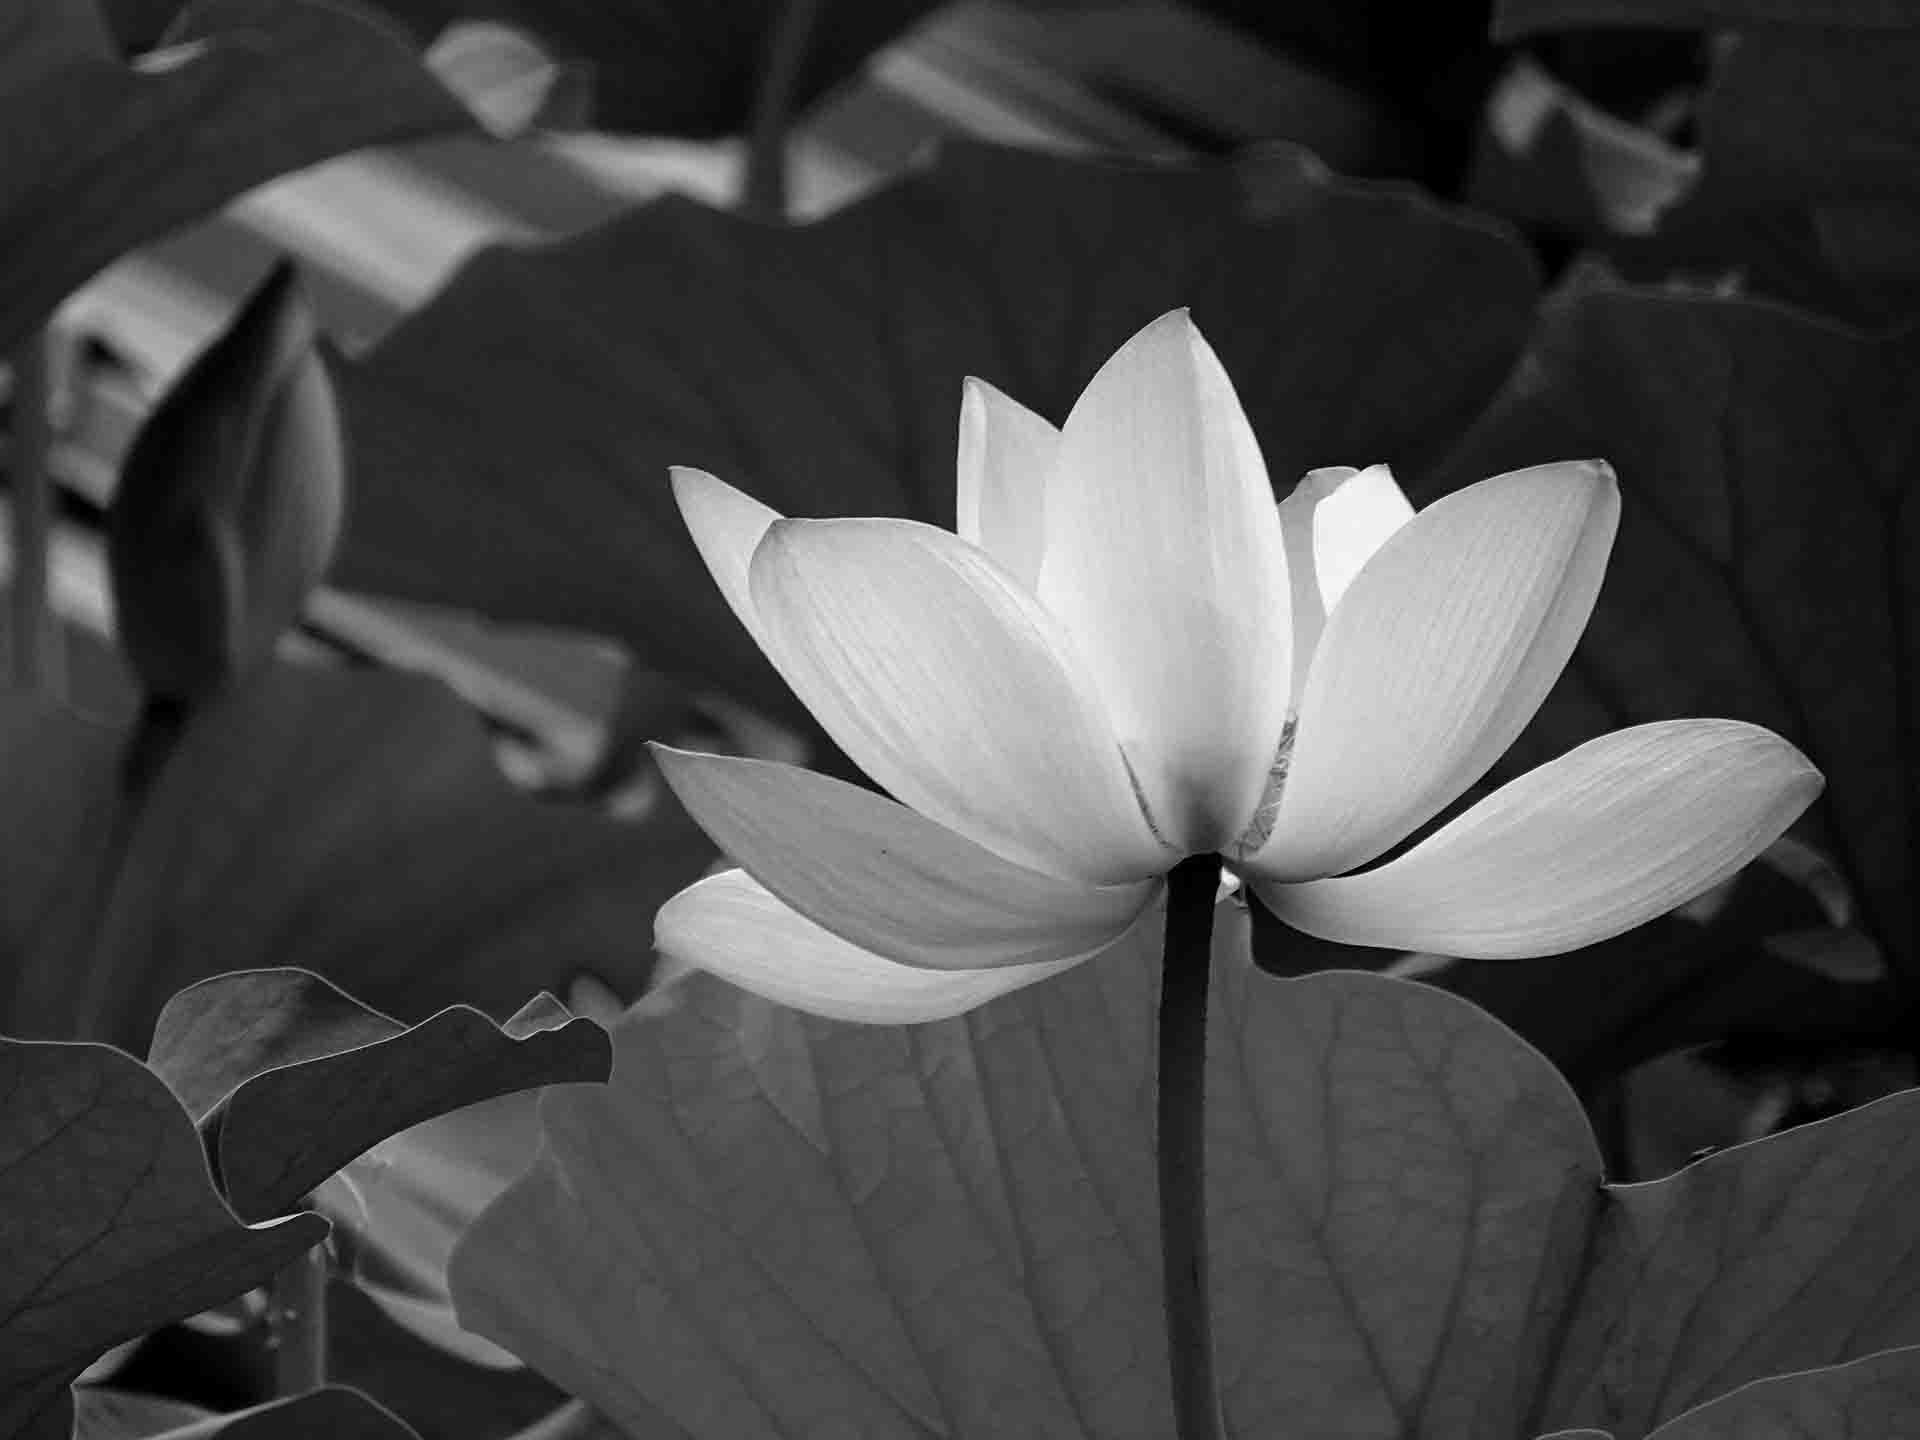 Lotusblüte in Schwarz-Weiß - Willkommensbild Qi Gong Praxis Bonn-Beuel